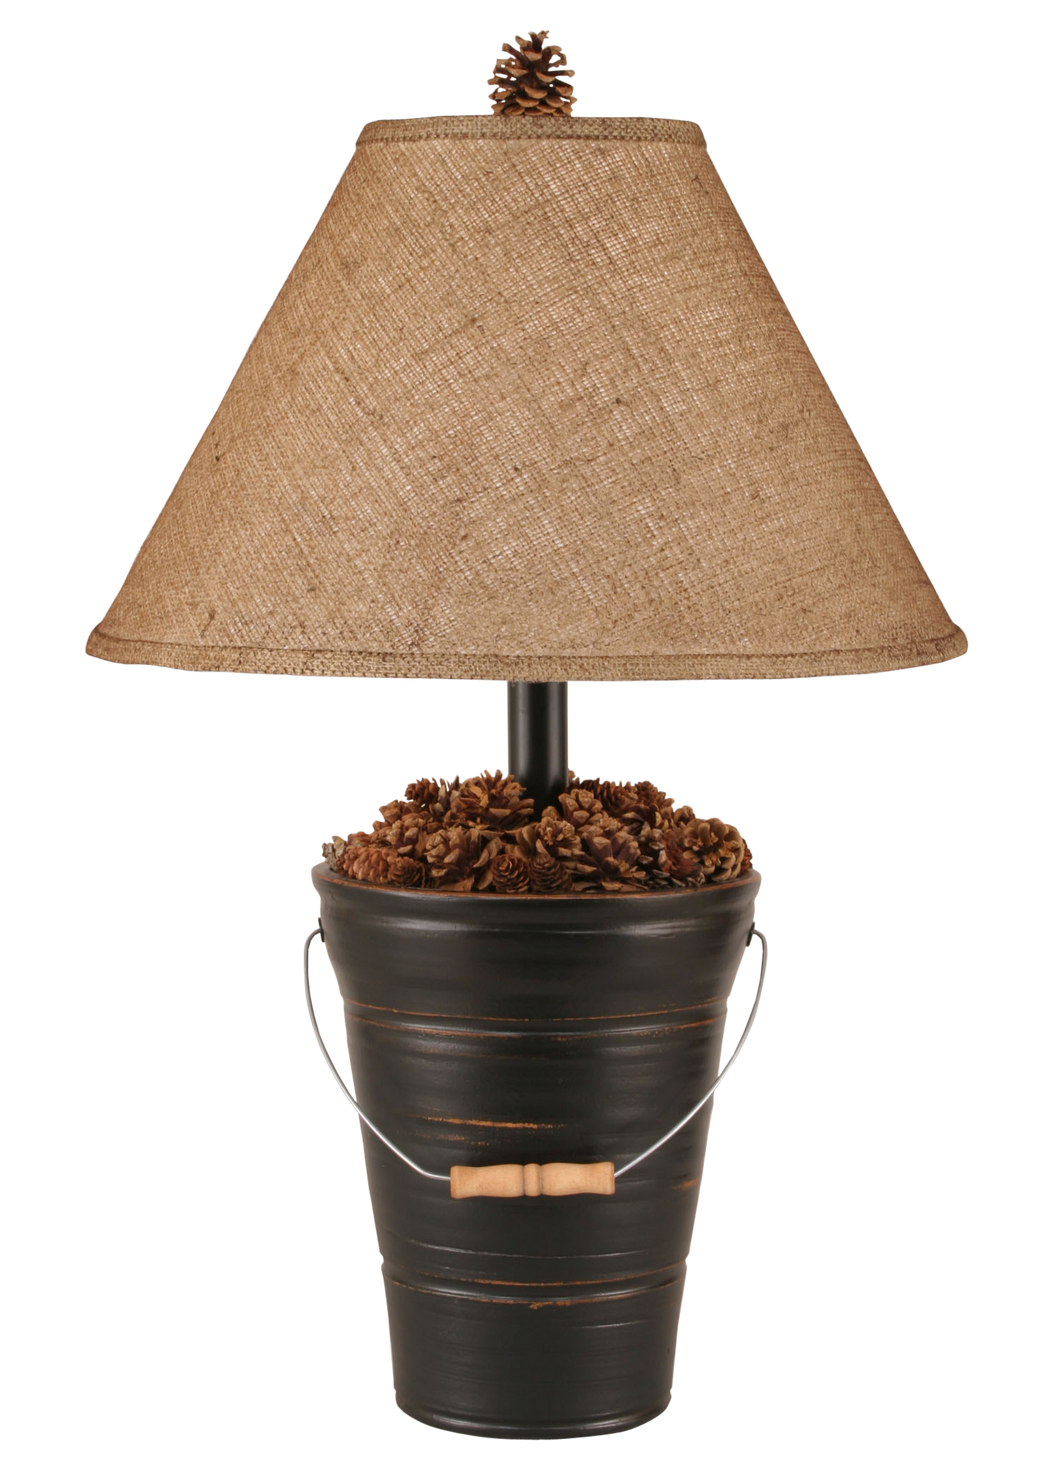 Distressed Black Bucket of Pine Cones Table Lamp